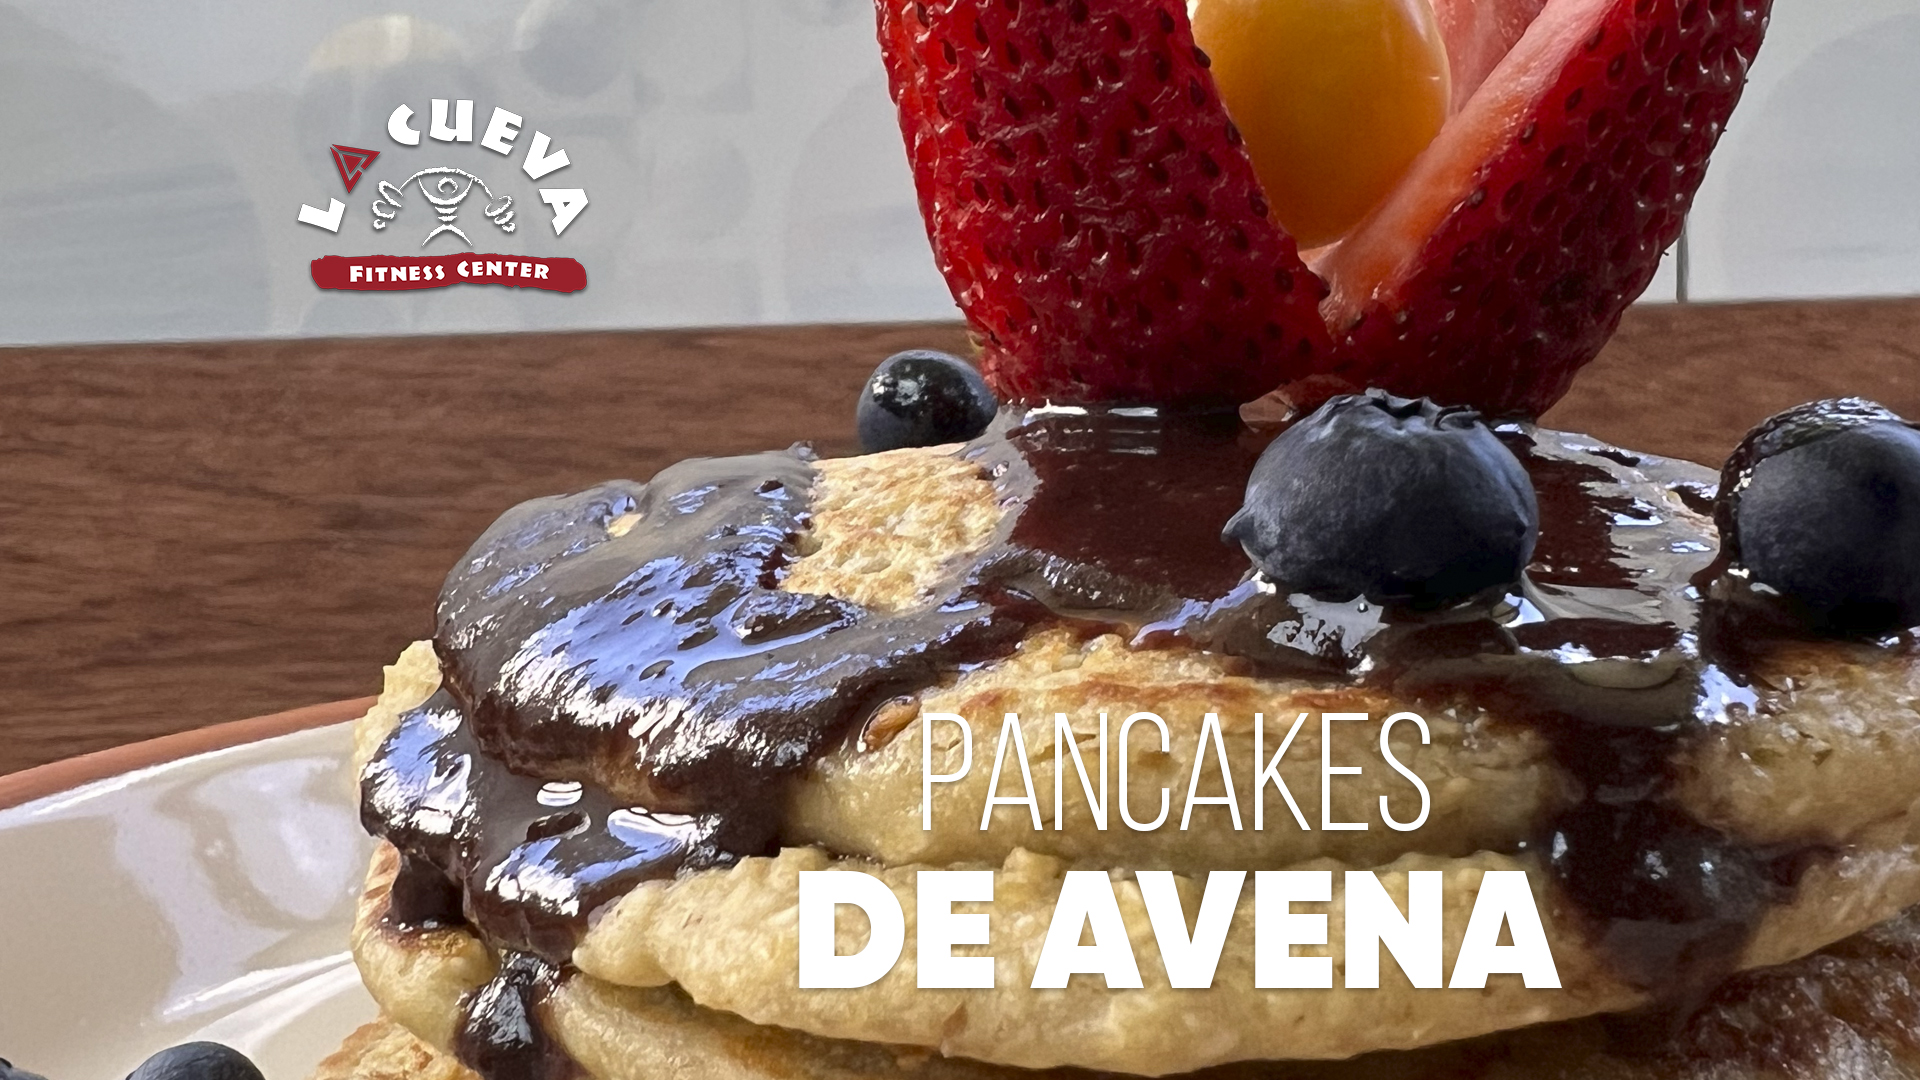 Receta-Pancakes-de-avena-La-Cueva-Fitness-Center